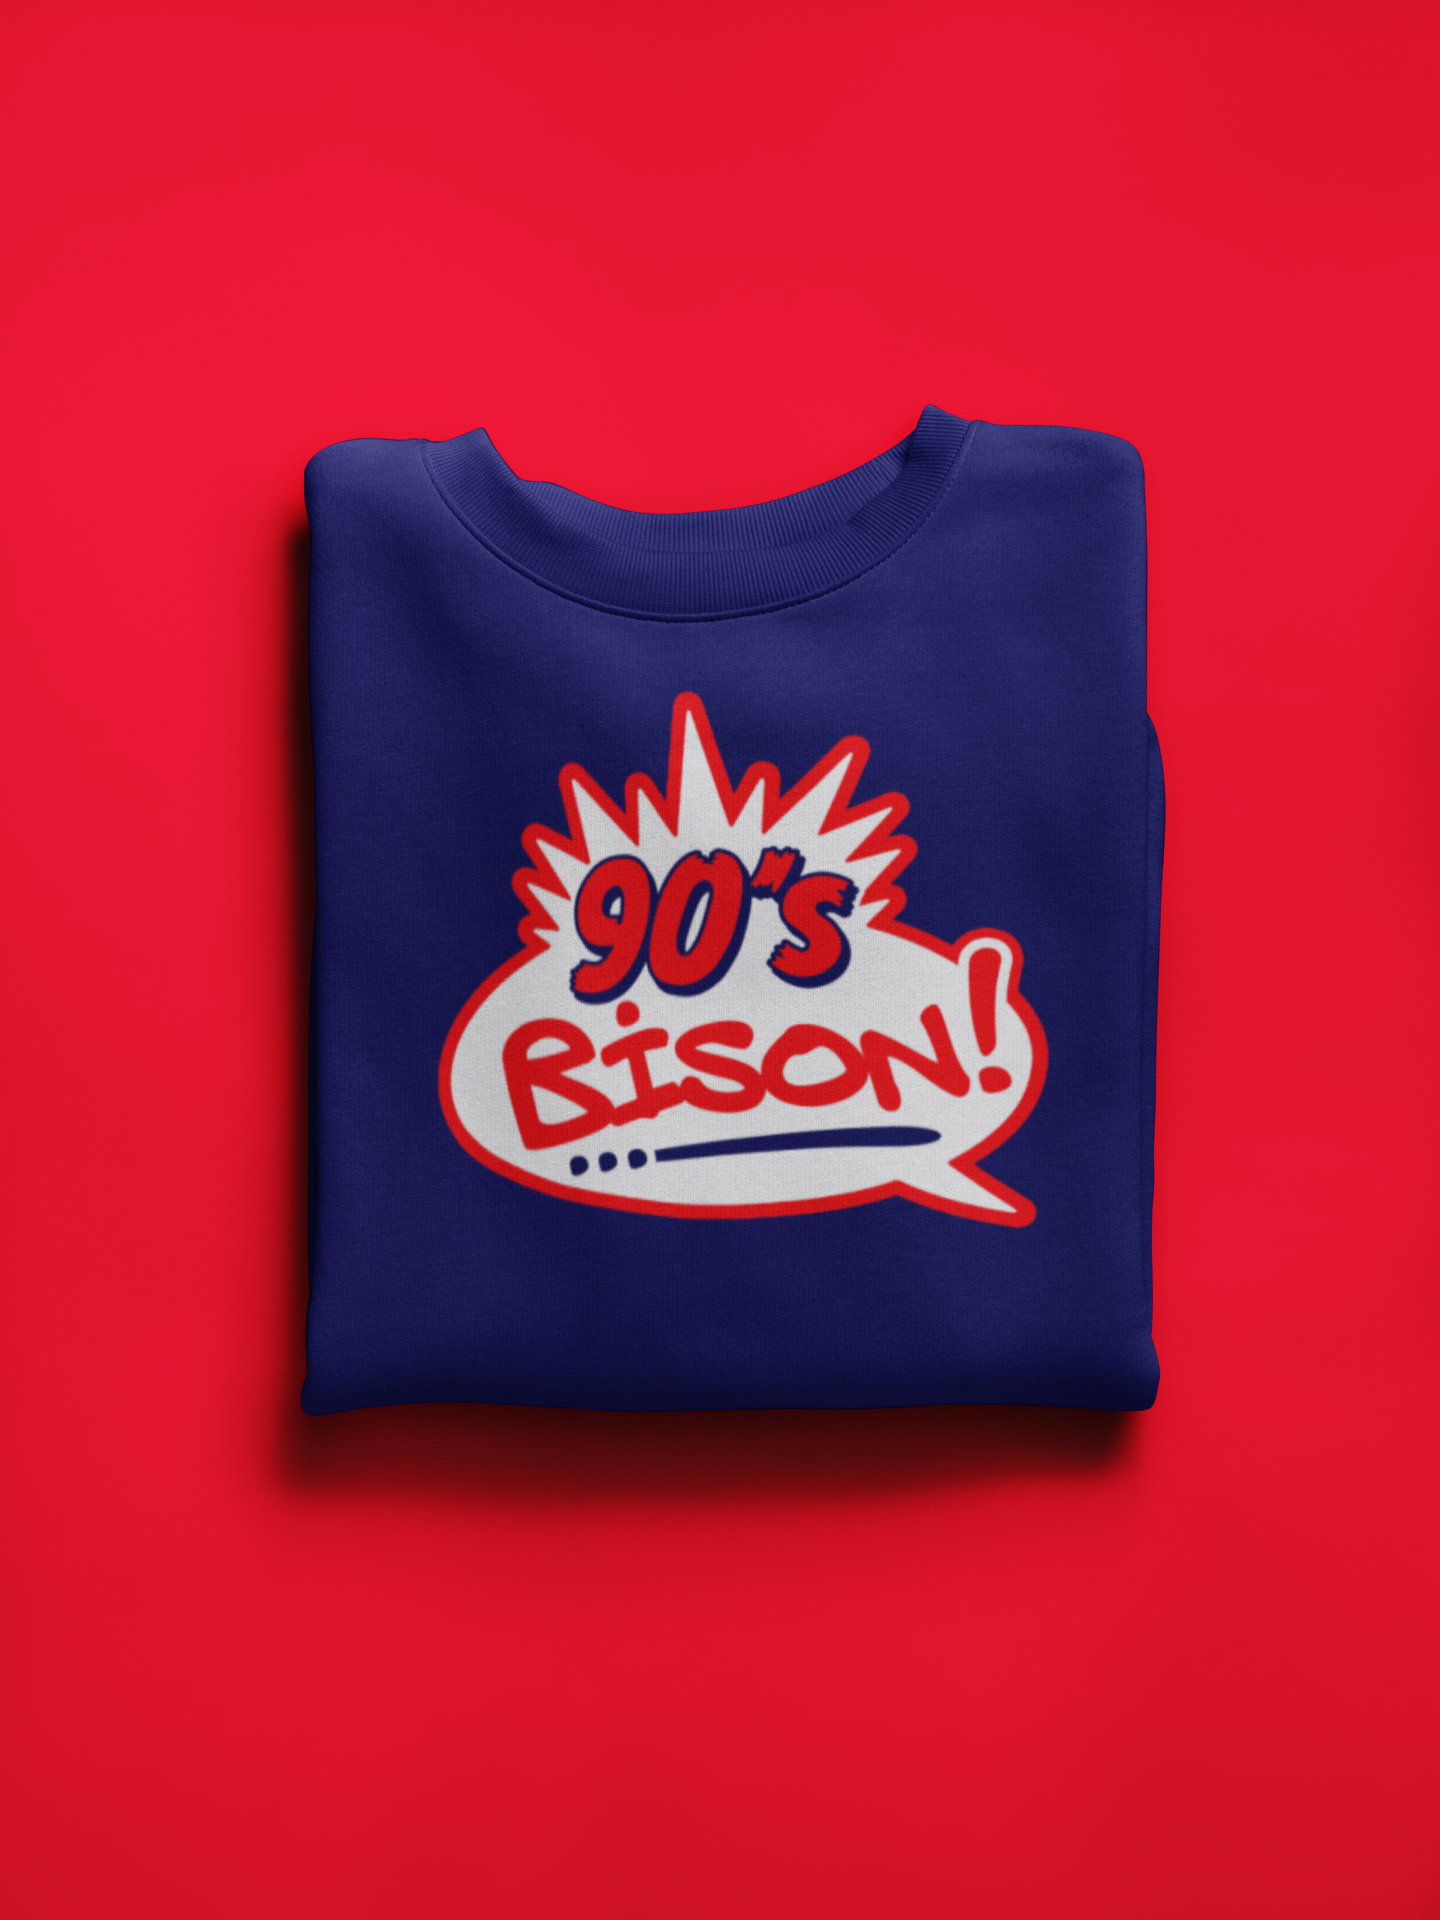 90s Bison Sweatshirt (YO! MTV Raps)